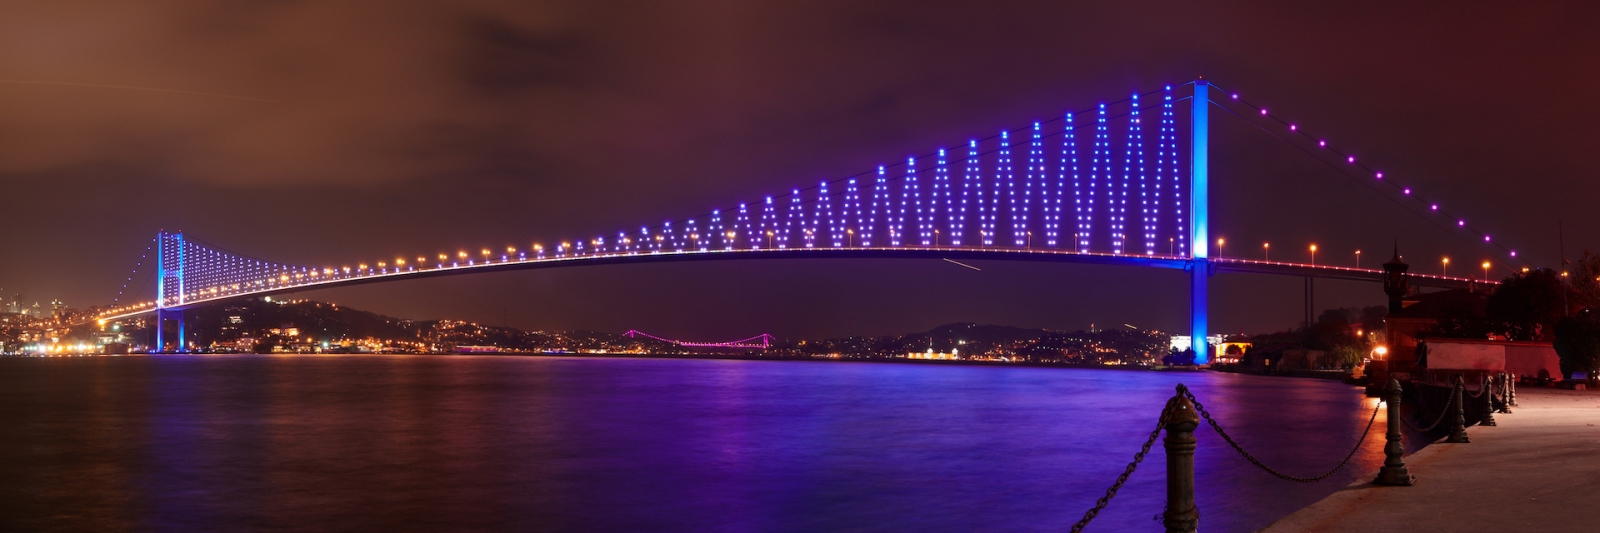 Illumination of the Bosphorus Bridge at night in Istanbul